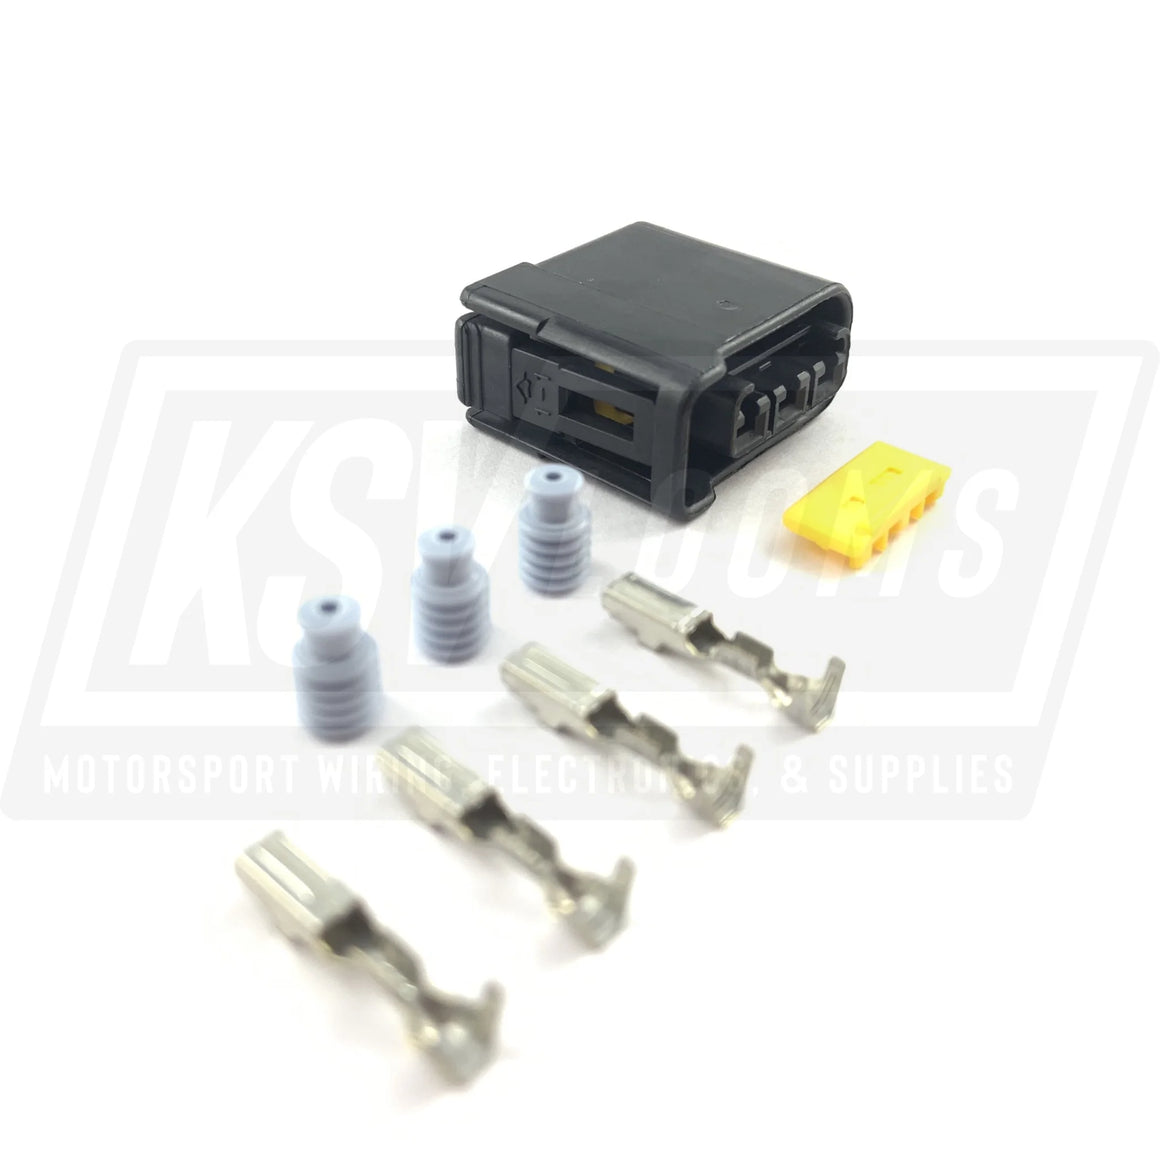 3-Way Connector Kit For Subaru Impreza Wrx Sti Ignition Coil Pack Ej20 Ej25 (22-20 Awg)